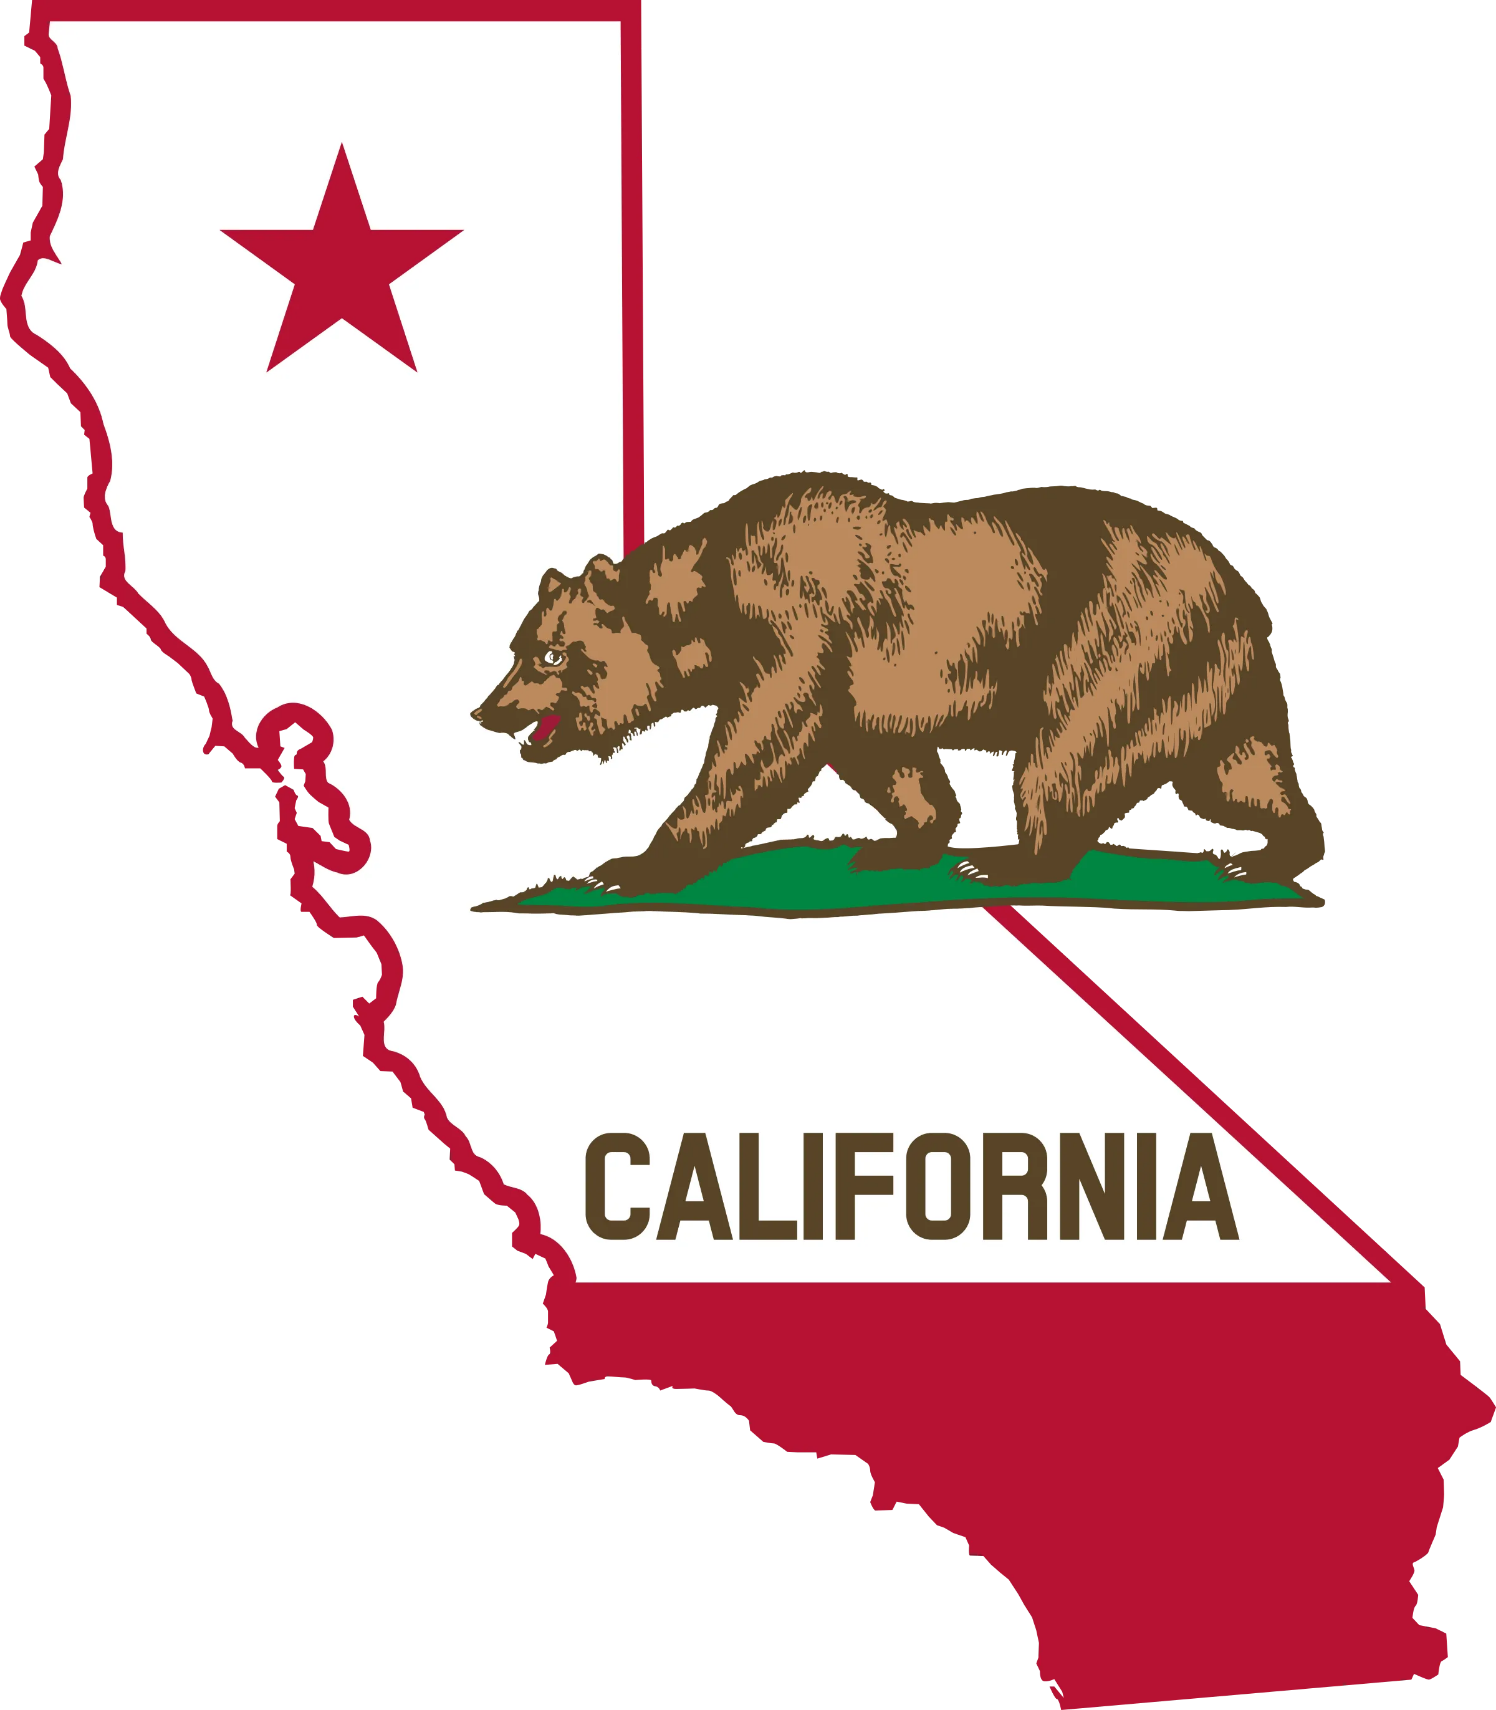 California outline and flag